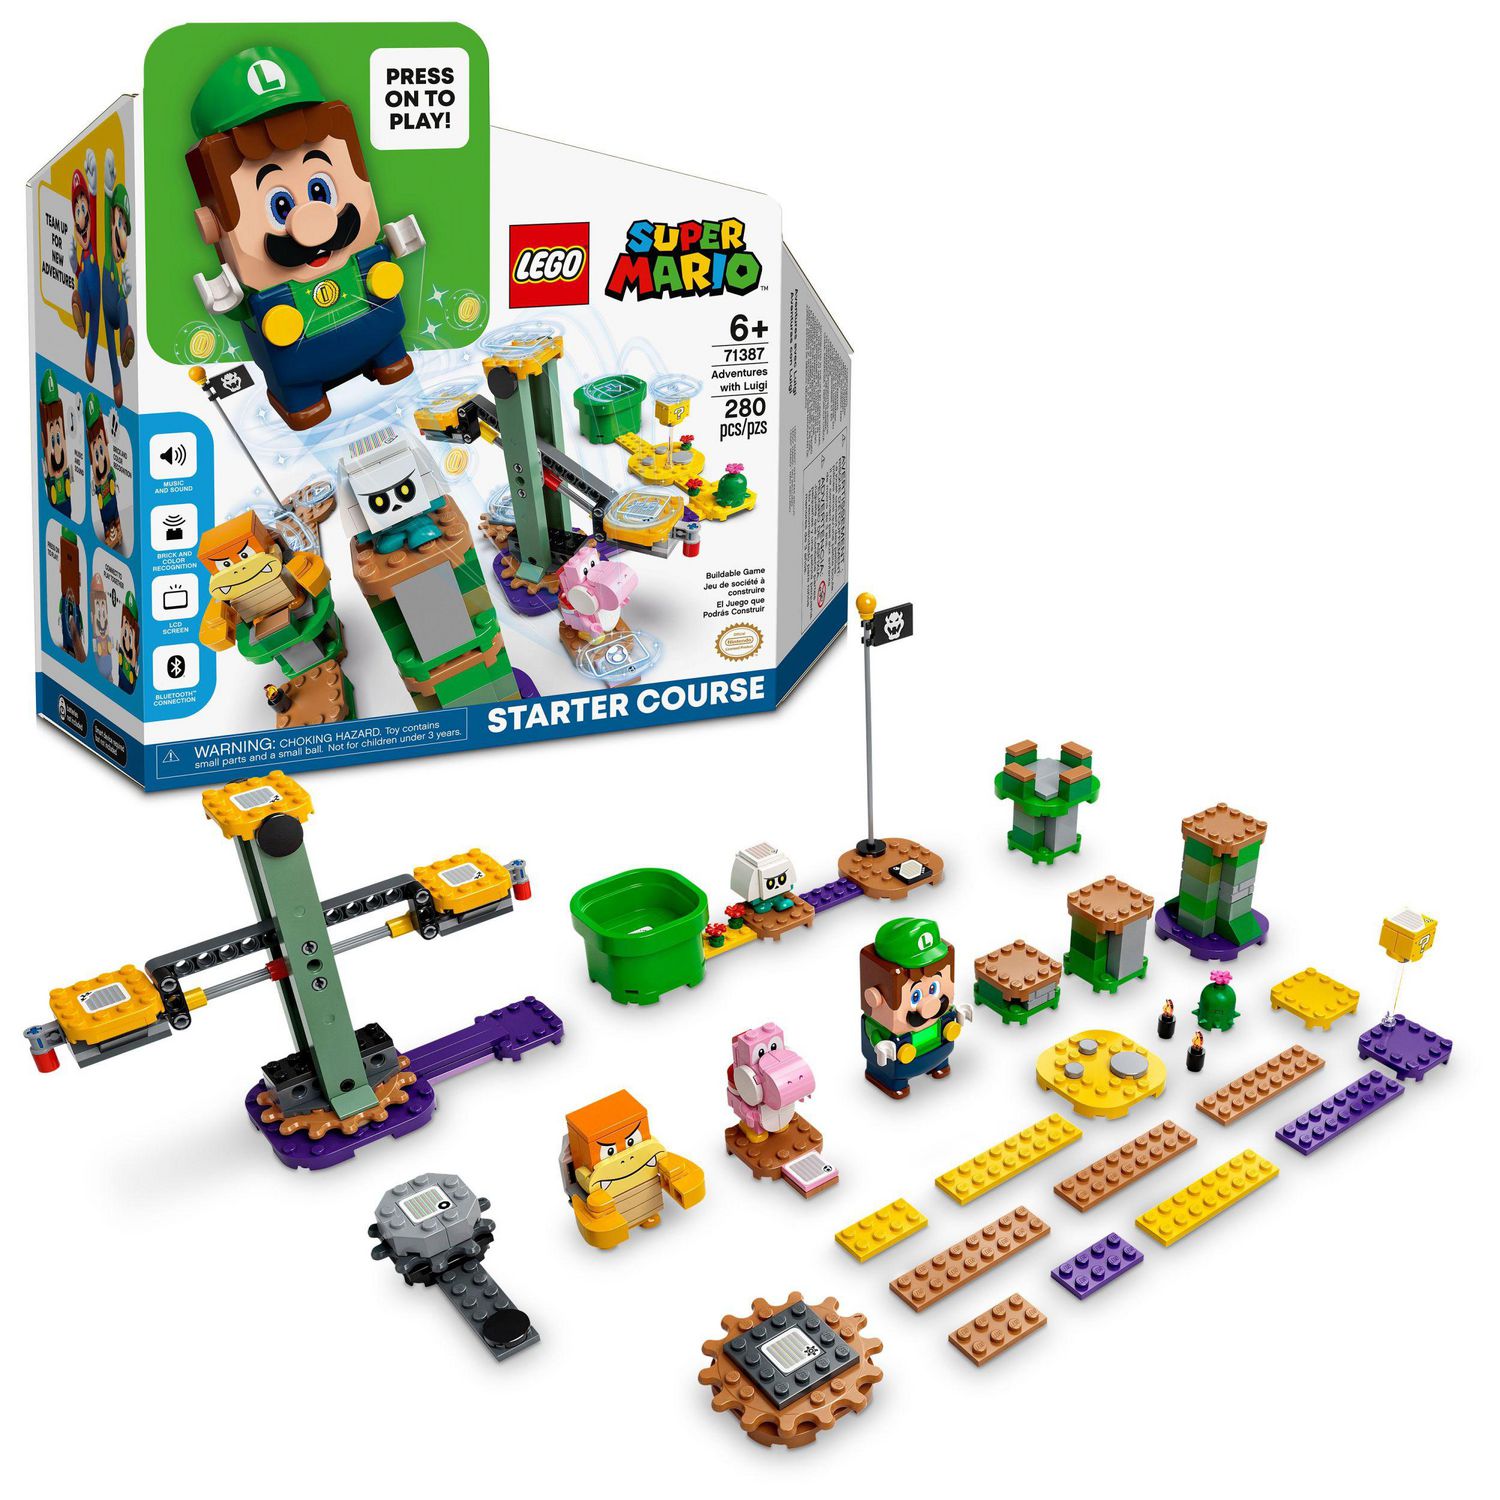 LEGO Super Mario Adventures with Luigi Starter Course 71387 Toy Building  Kit (280 Pieces), Includes 280 Pieces, Ages 6+